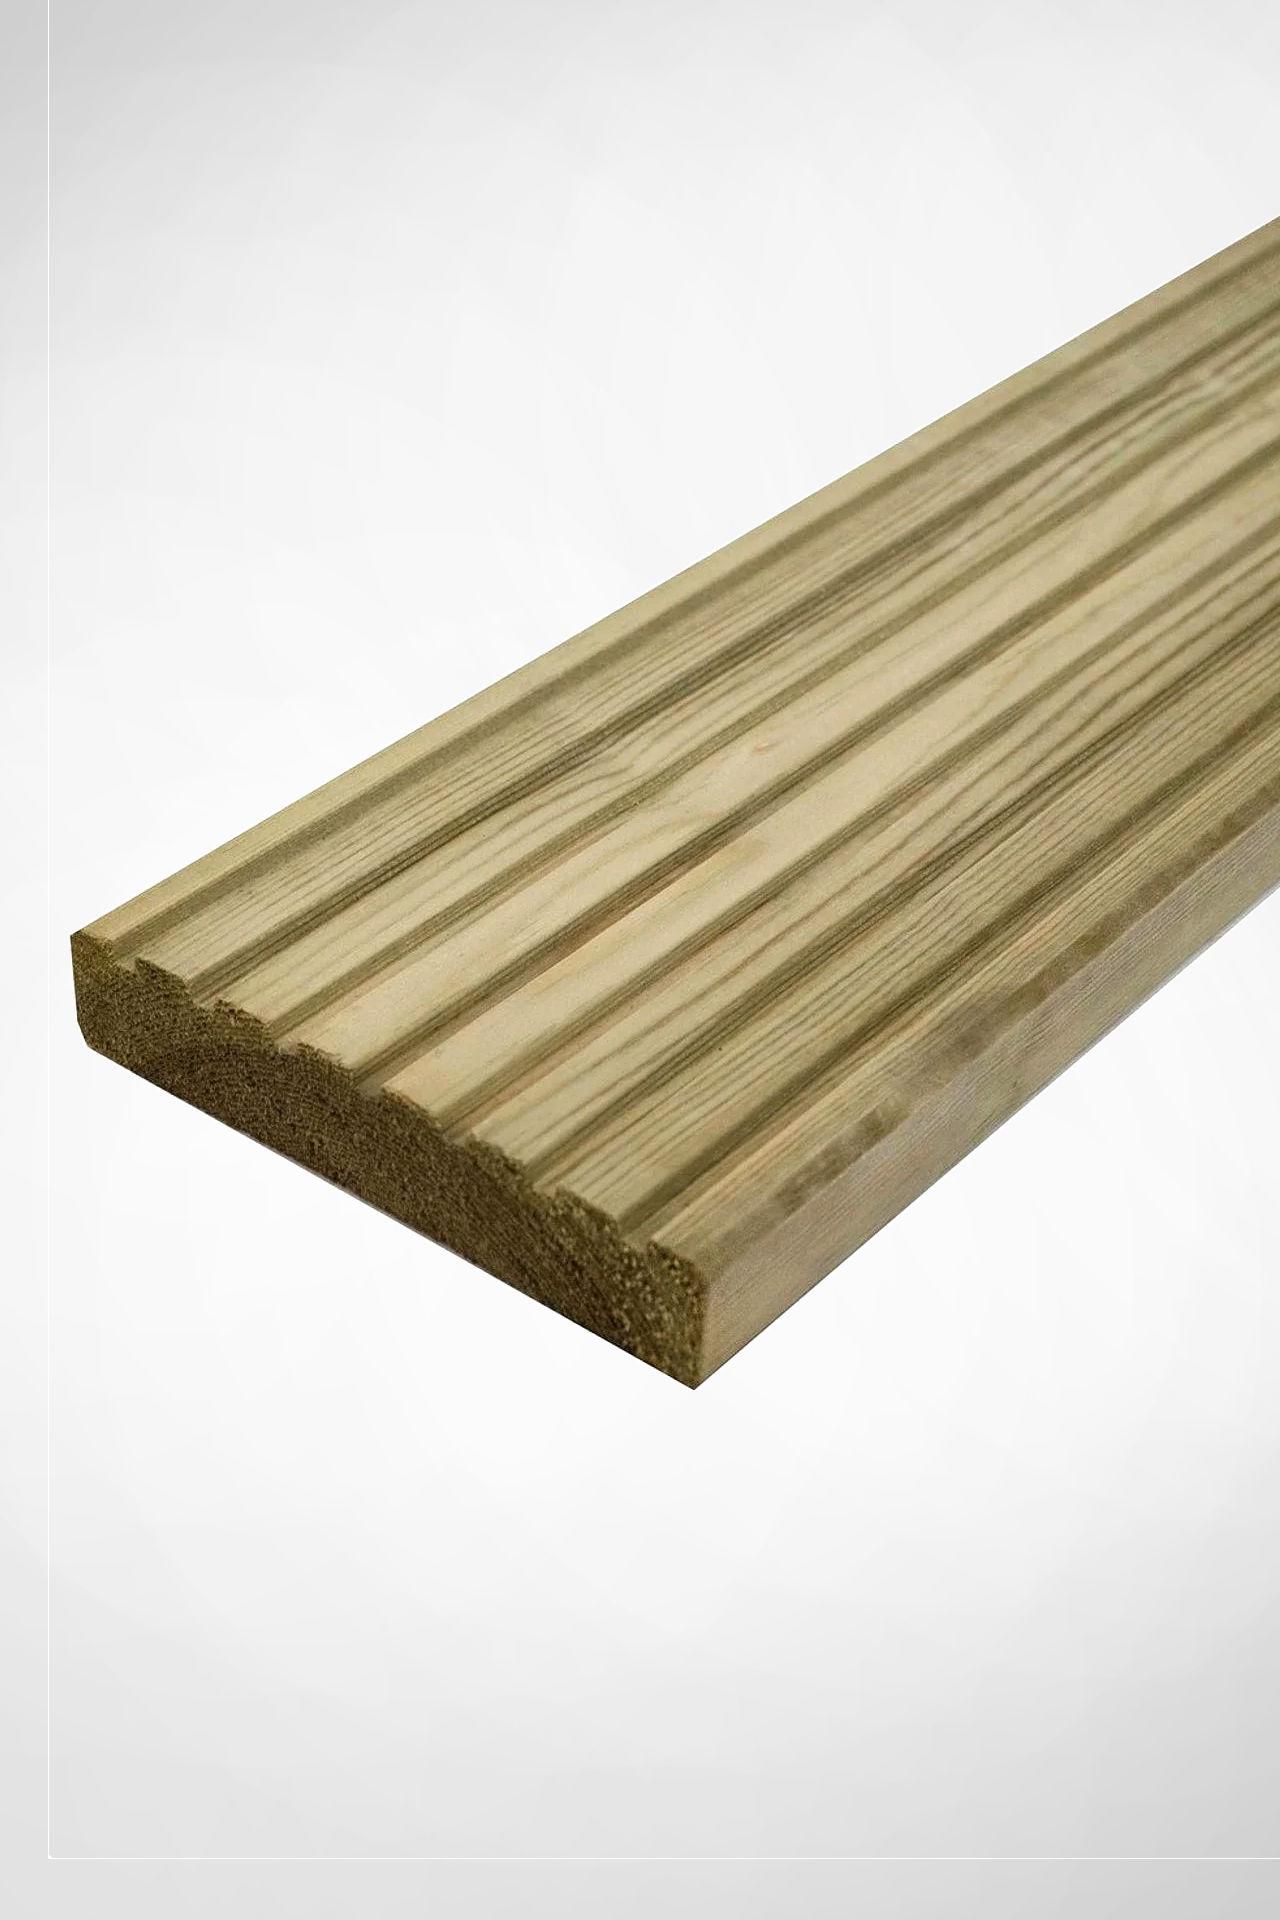 Softwood Treated Decking Board Ridged Standard